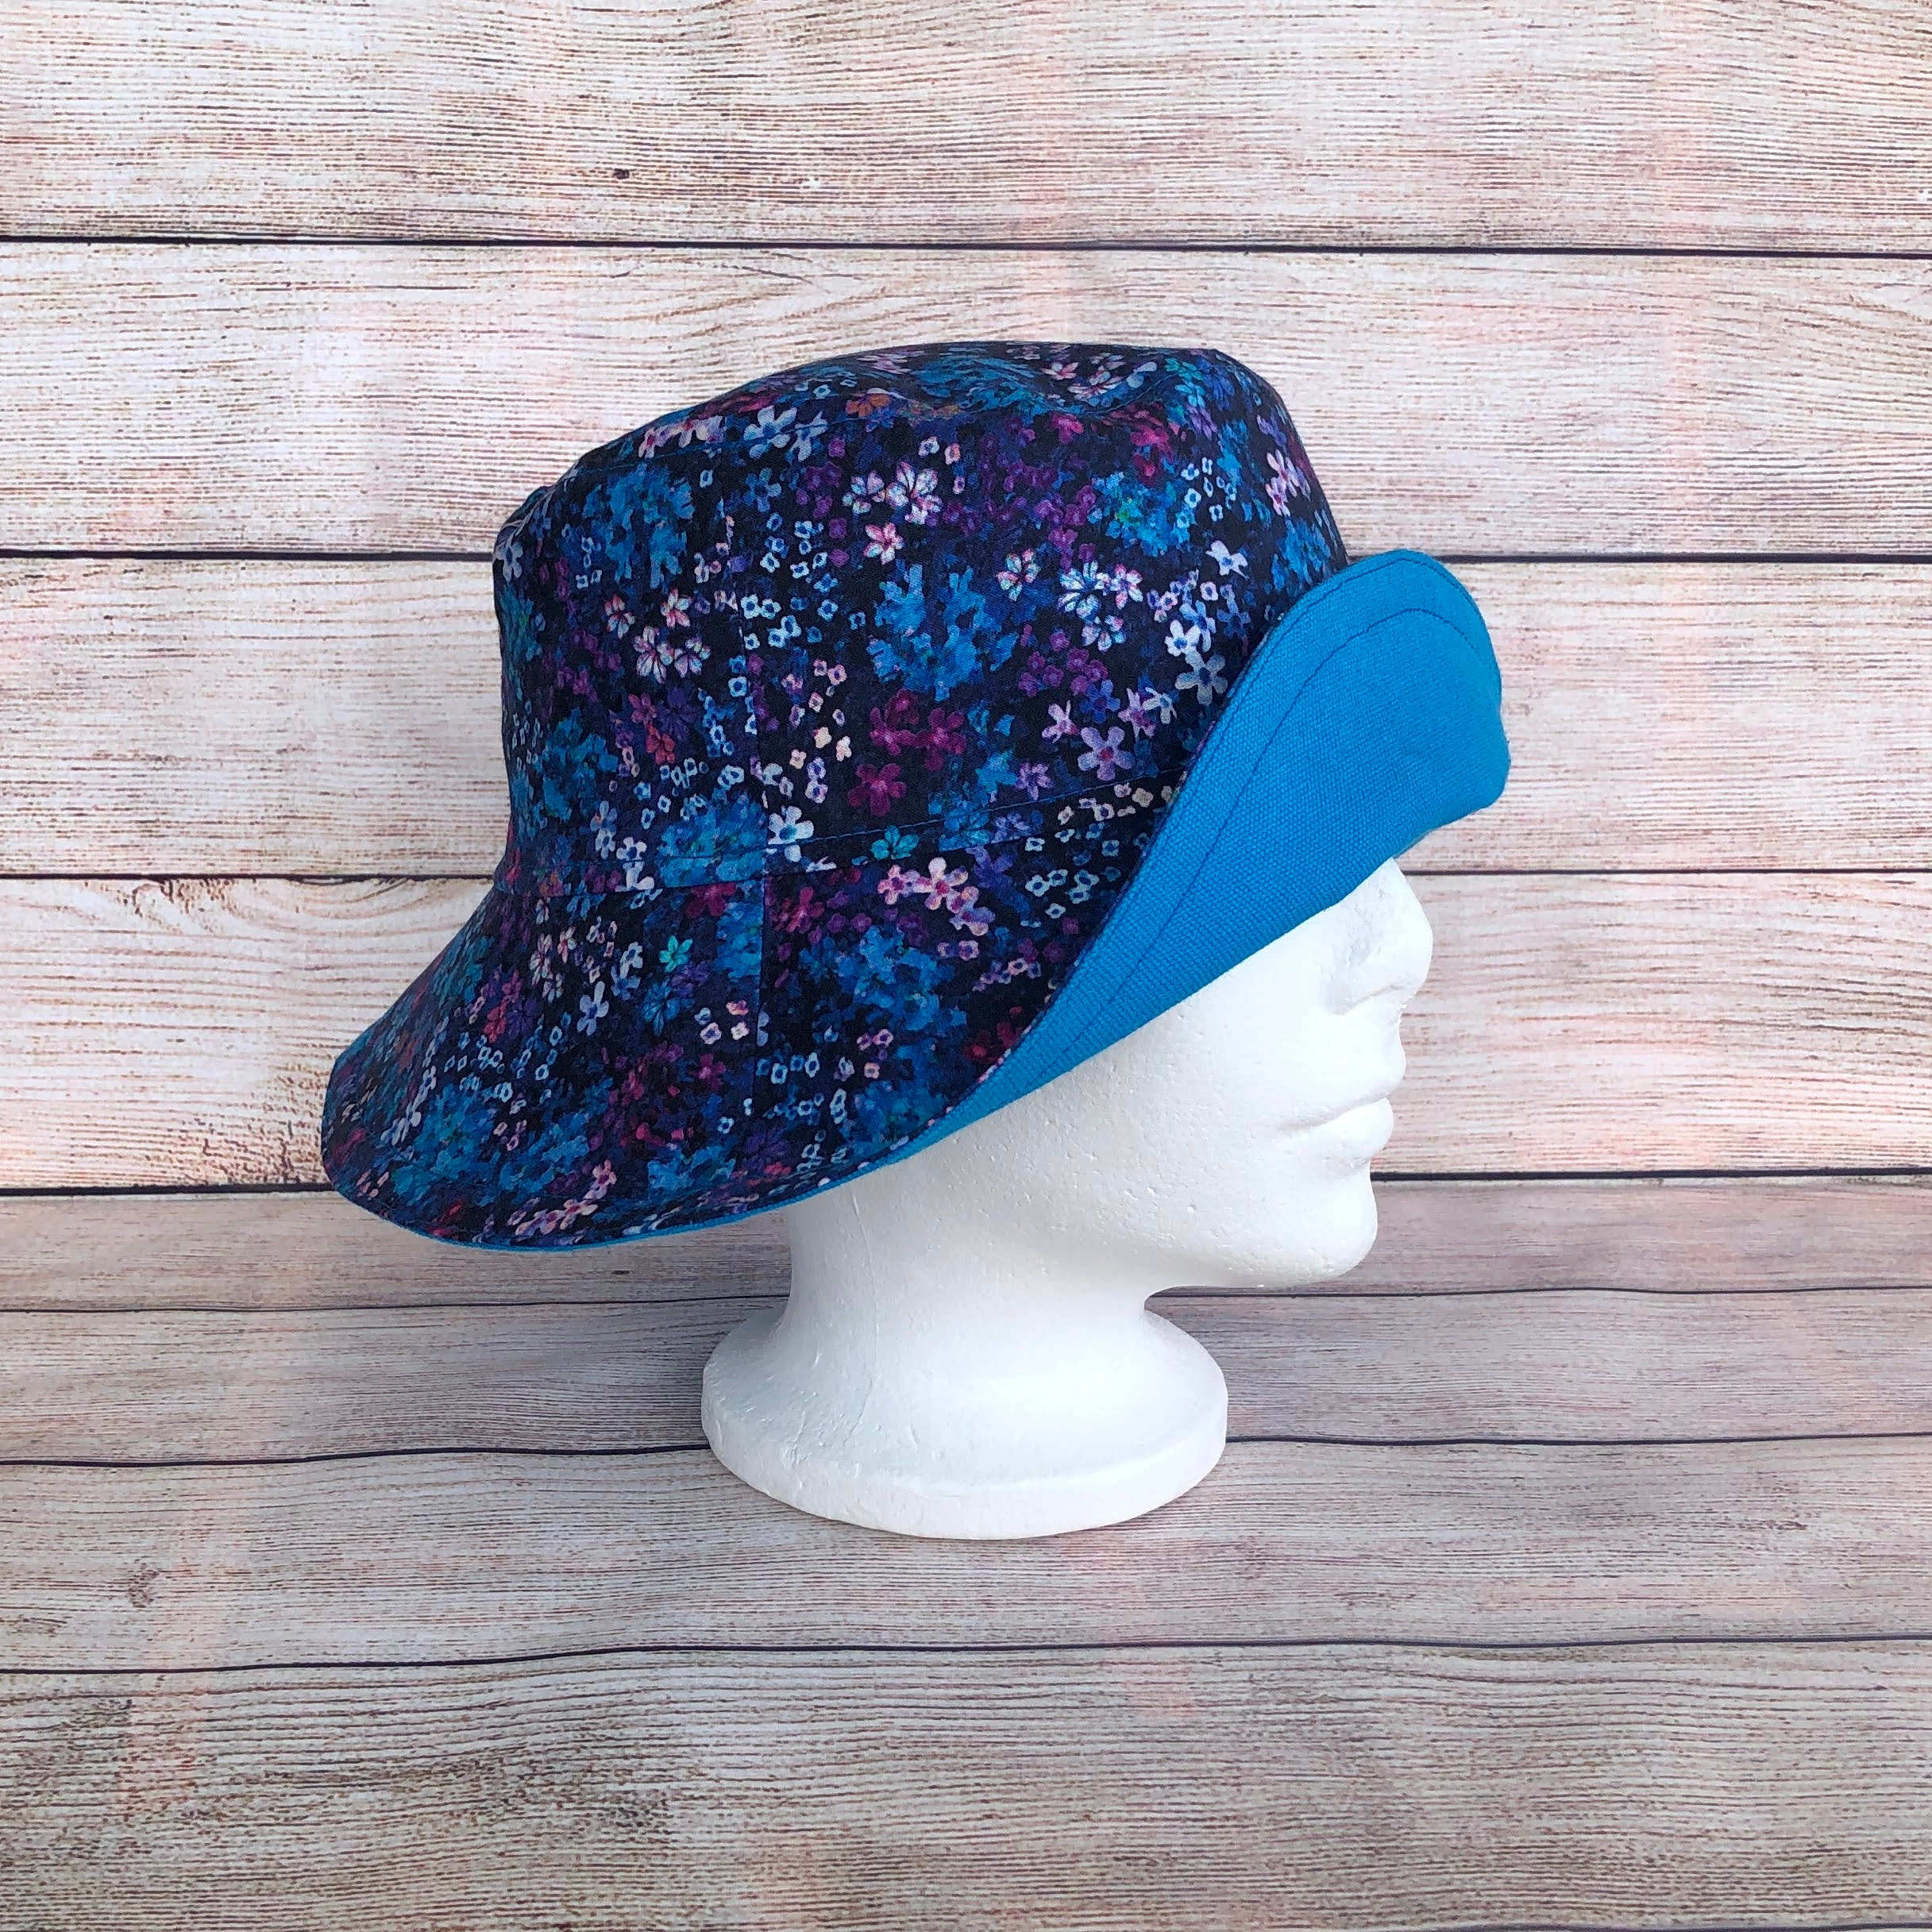 Sun Hat - 3 Brim, adult Bucket Hat, Reversible Cotton Gardening Hat, Sun Visor, Boho Hat for Women, Summer Beachwear, Sun Protection